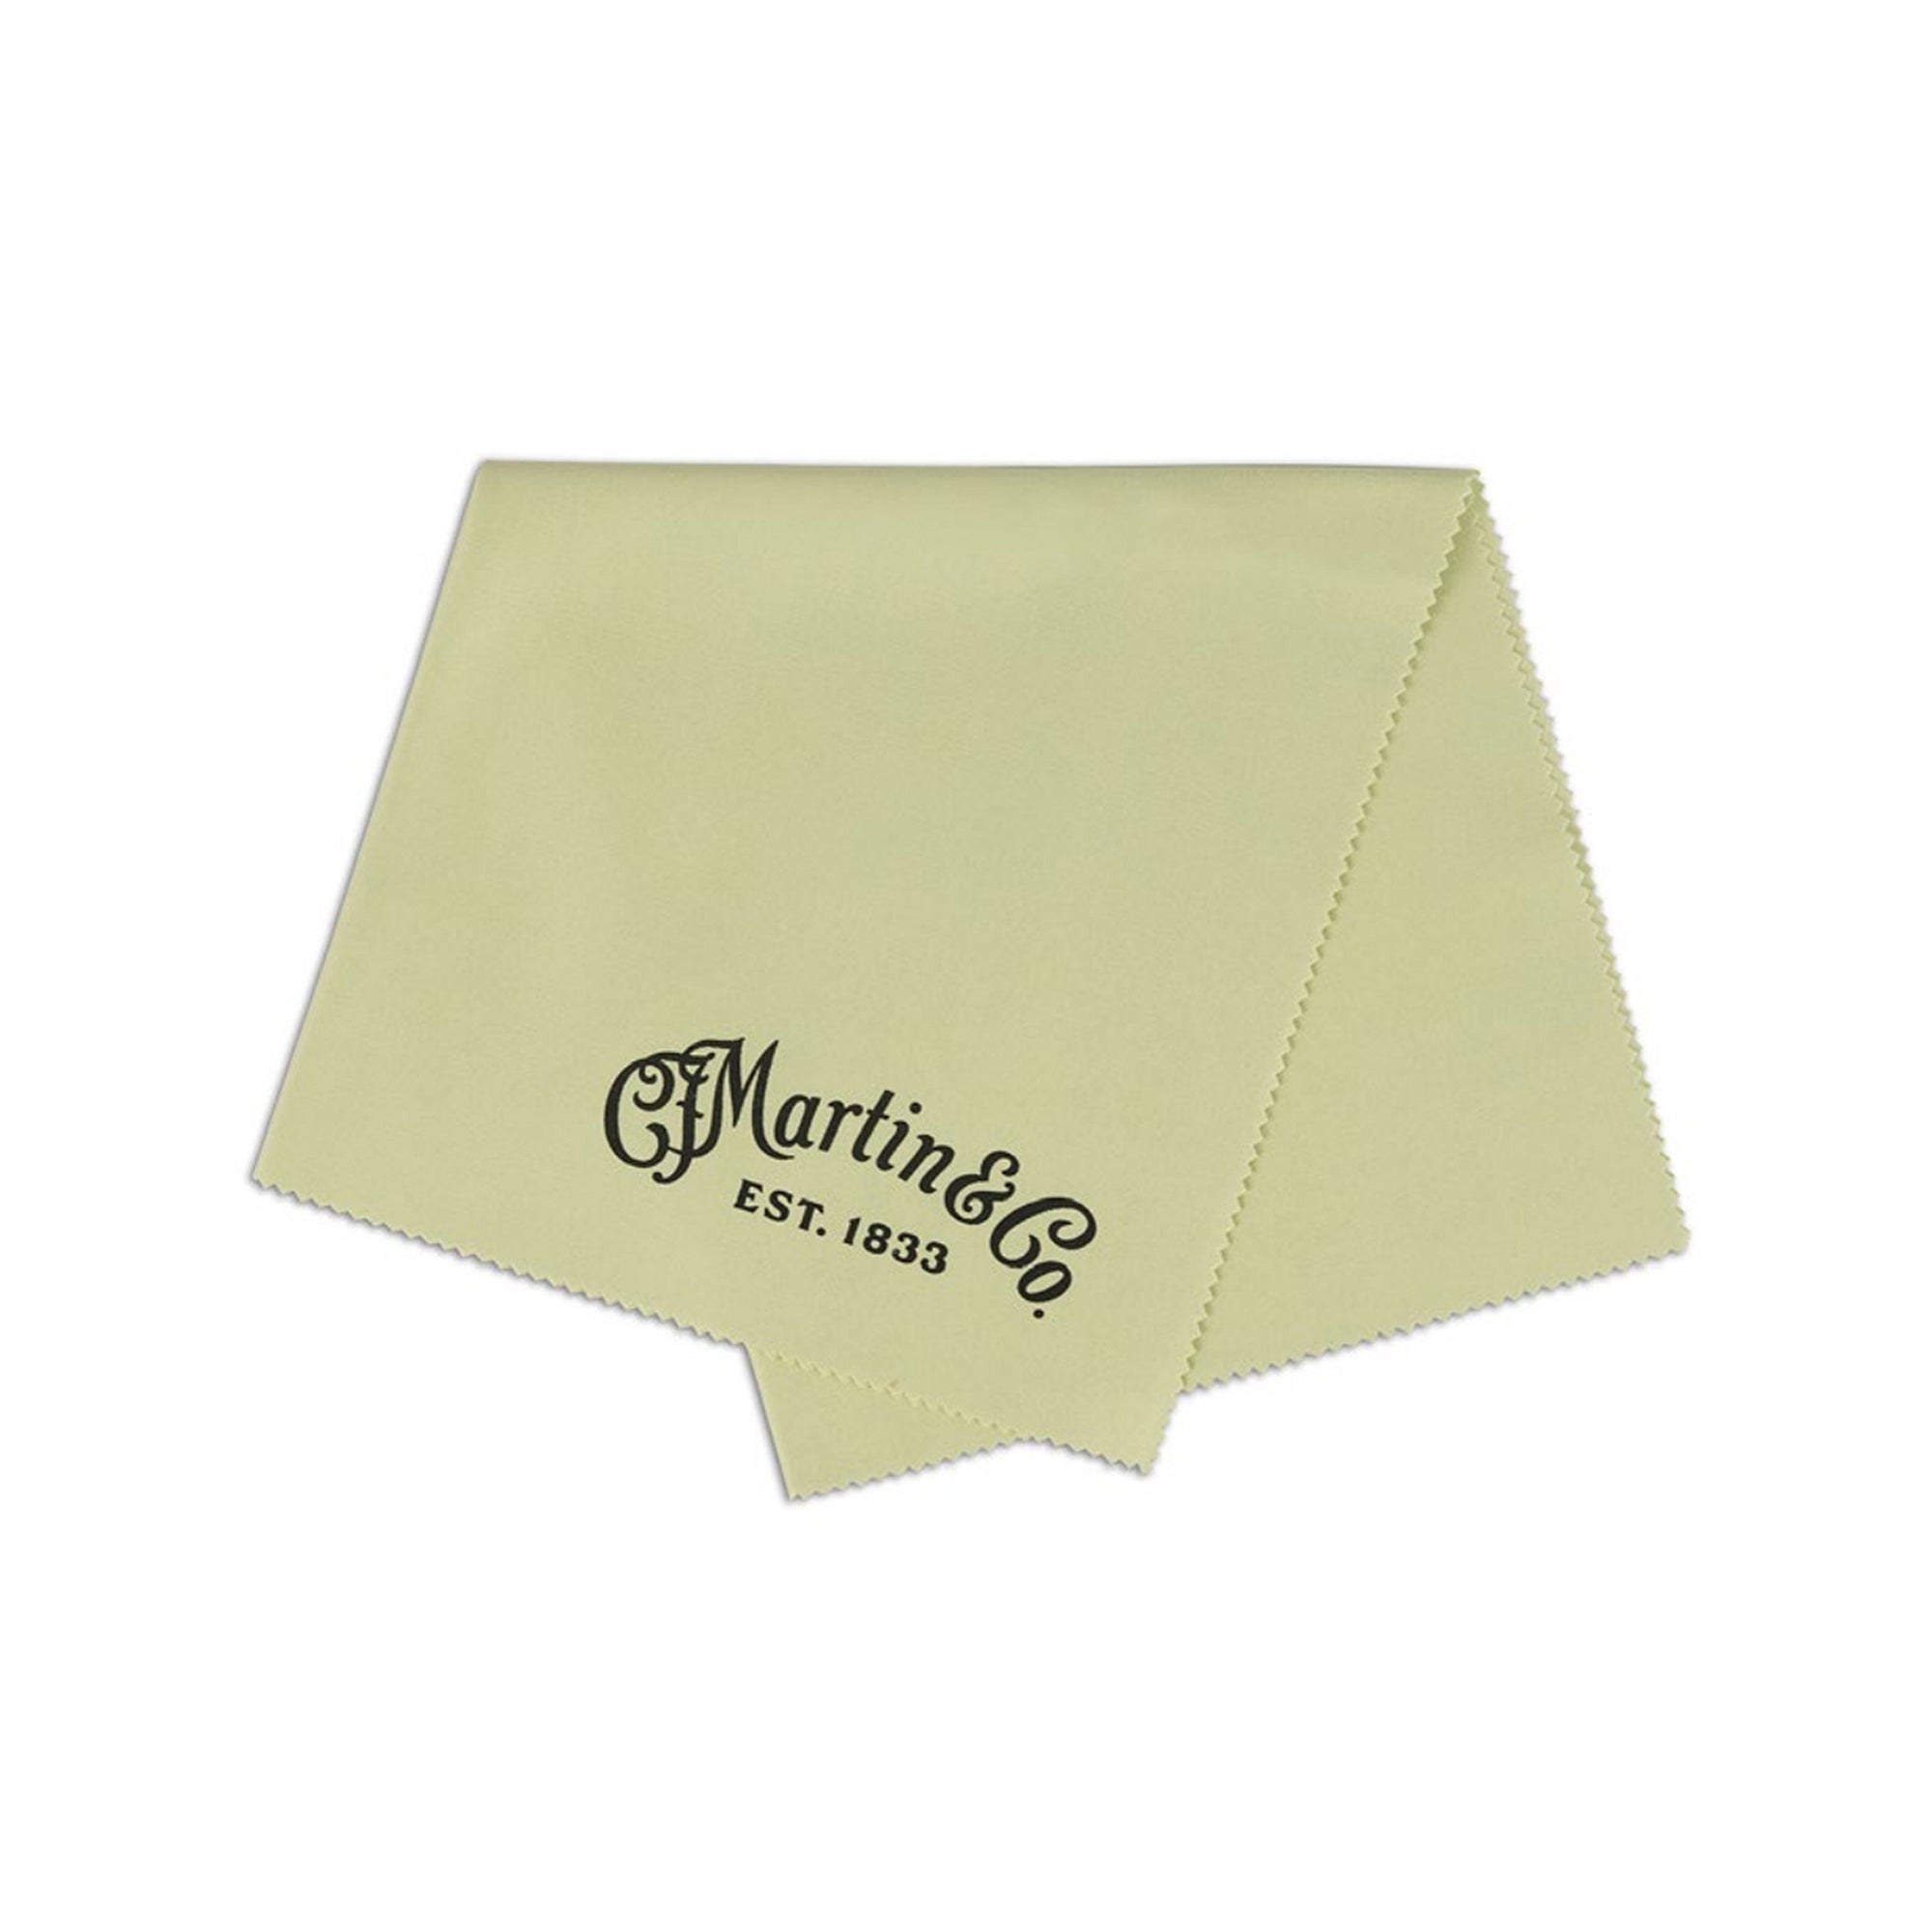 Martin Microfiber Polishing Cloth 11.8x11.8